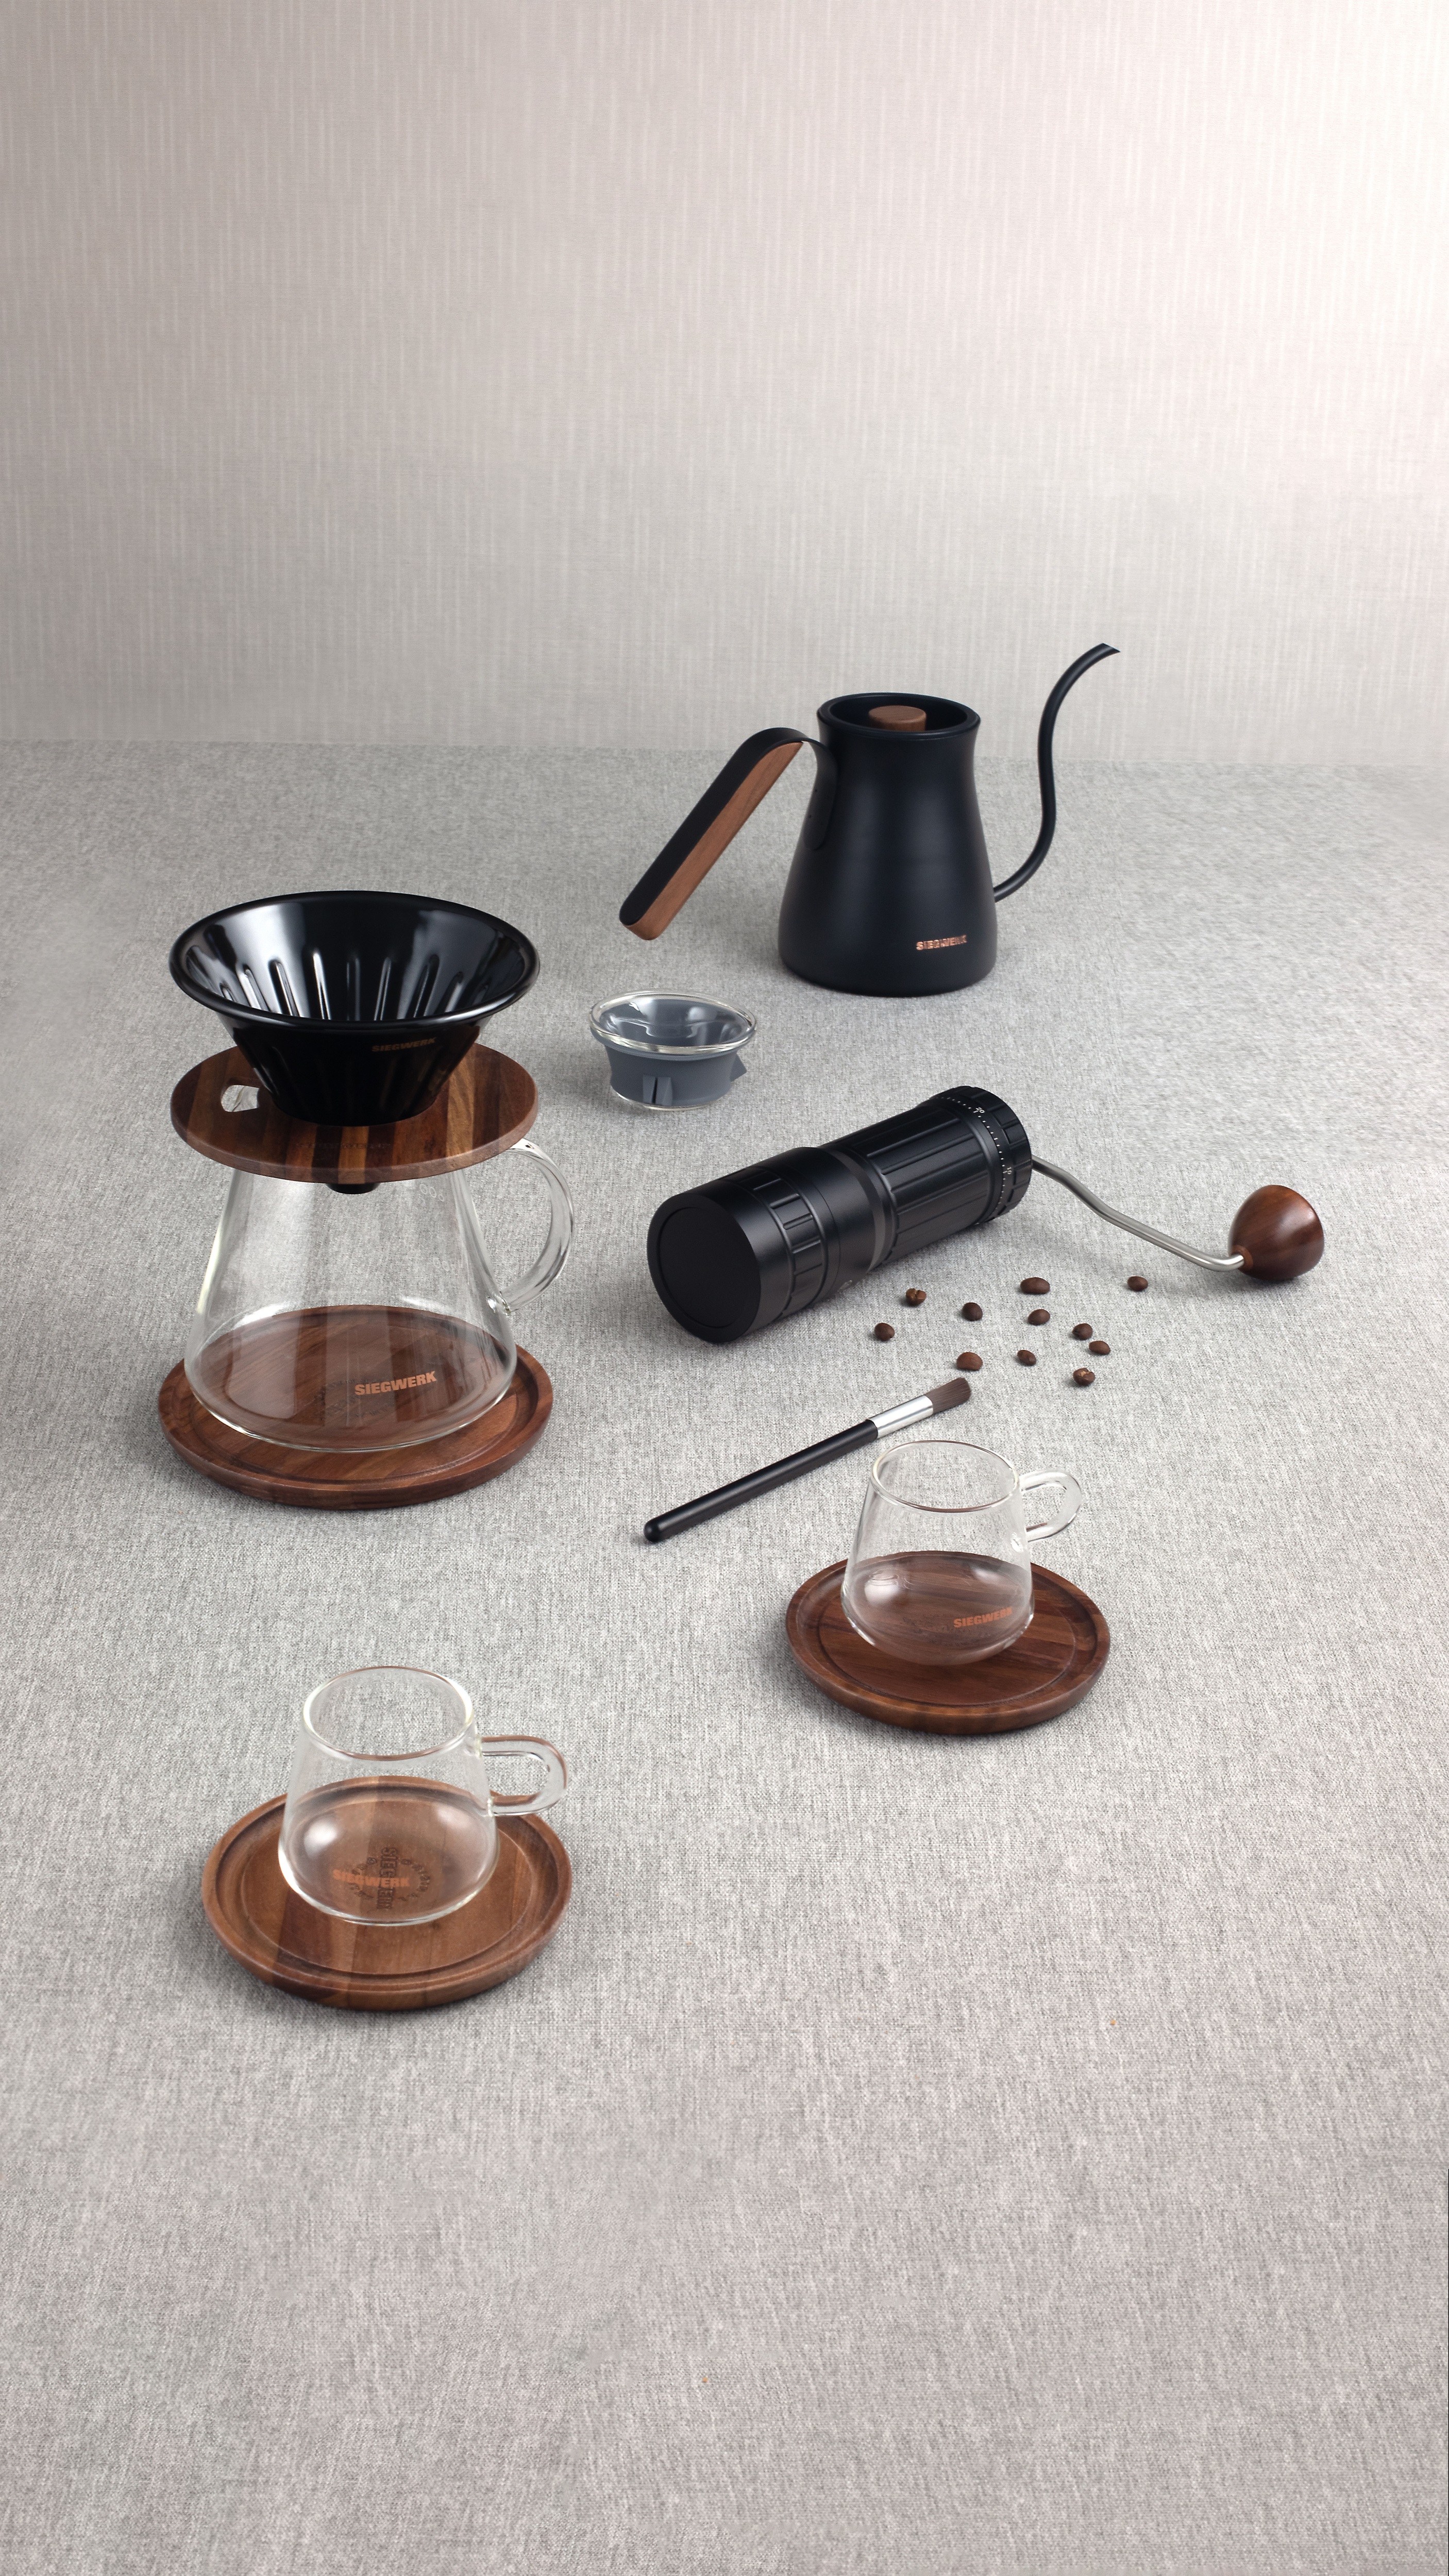 Siegwerk pour-over coffee set